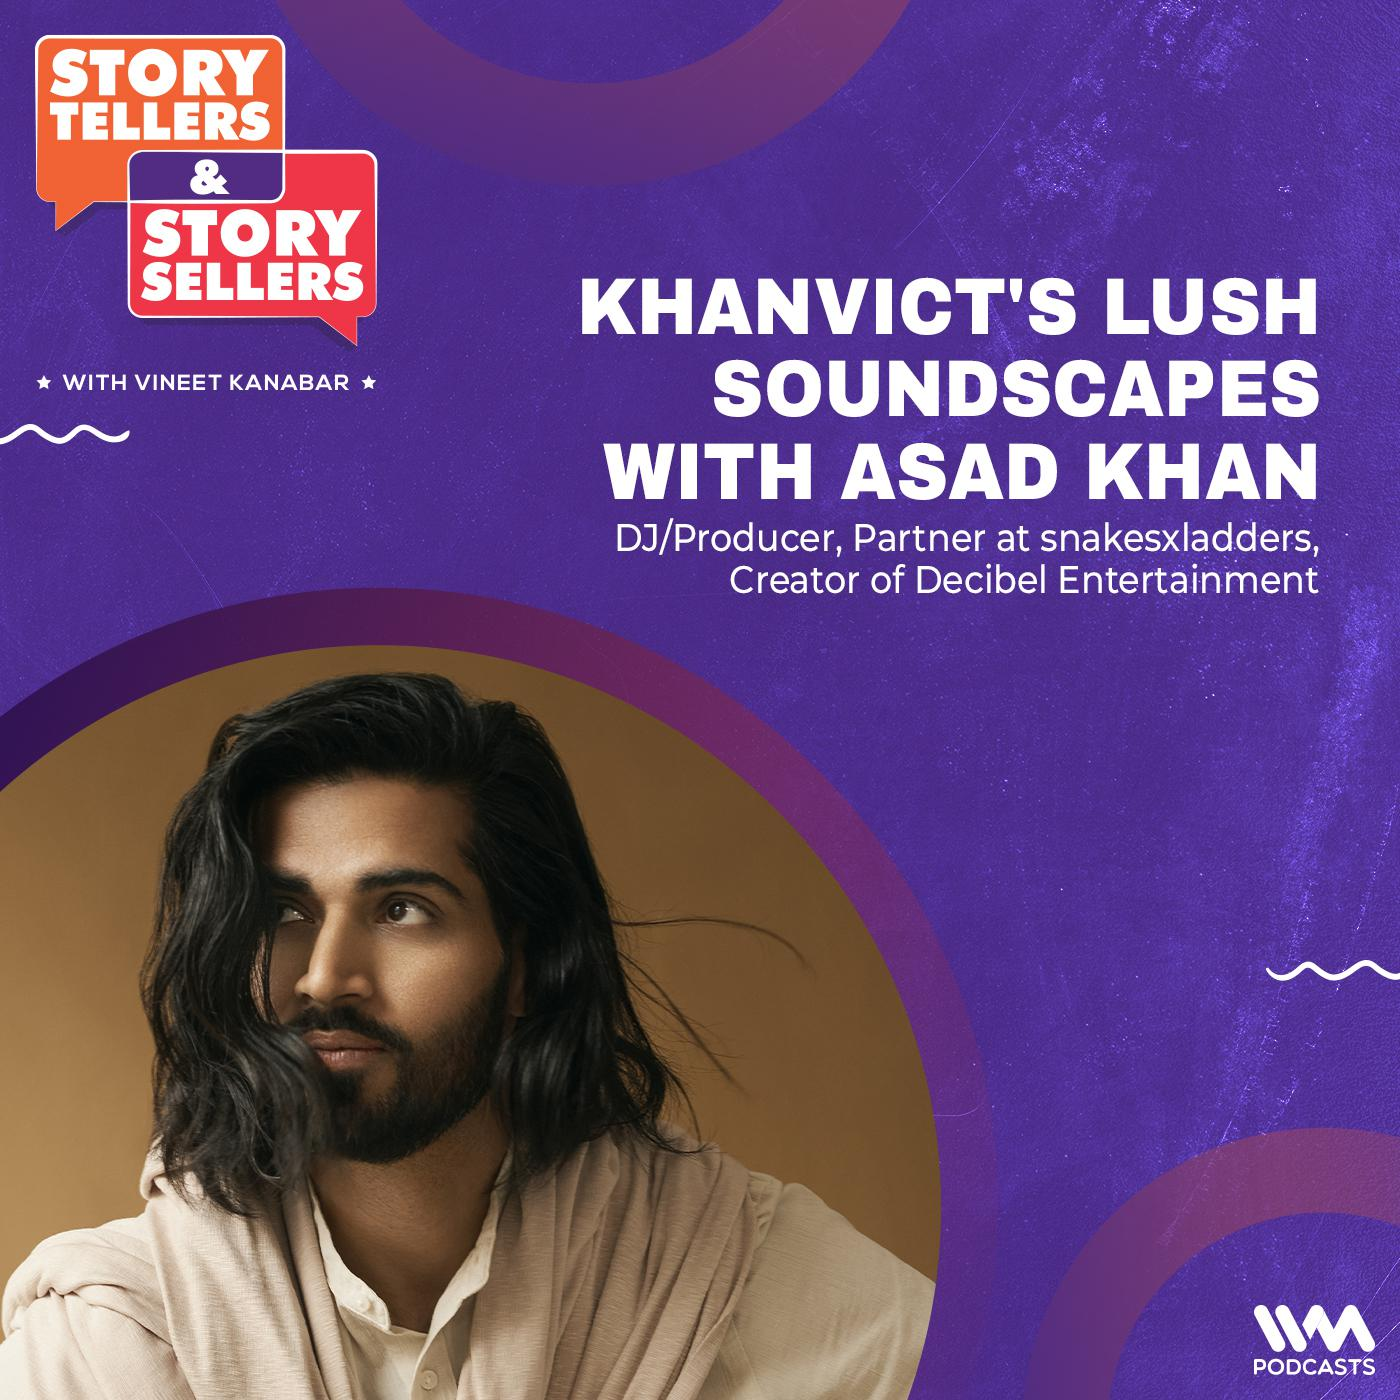 Asad Khan on Khanvict's Lush Soundscapes